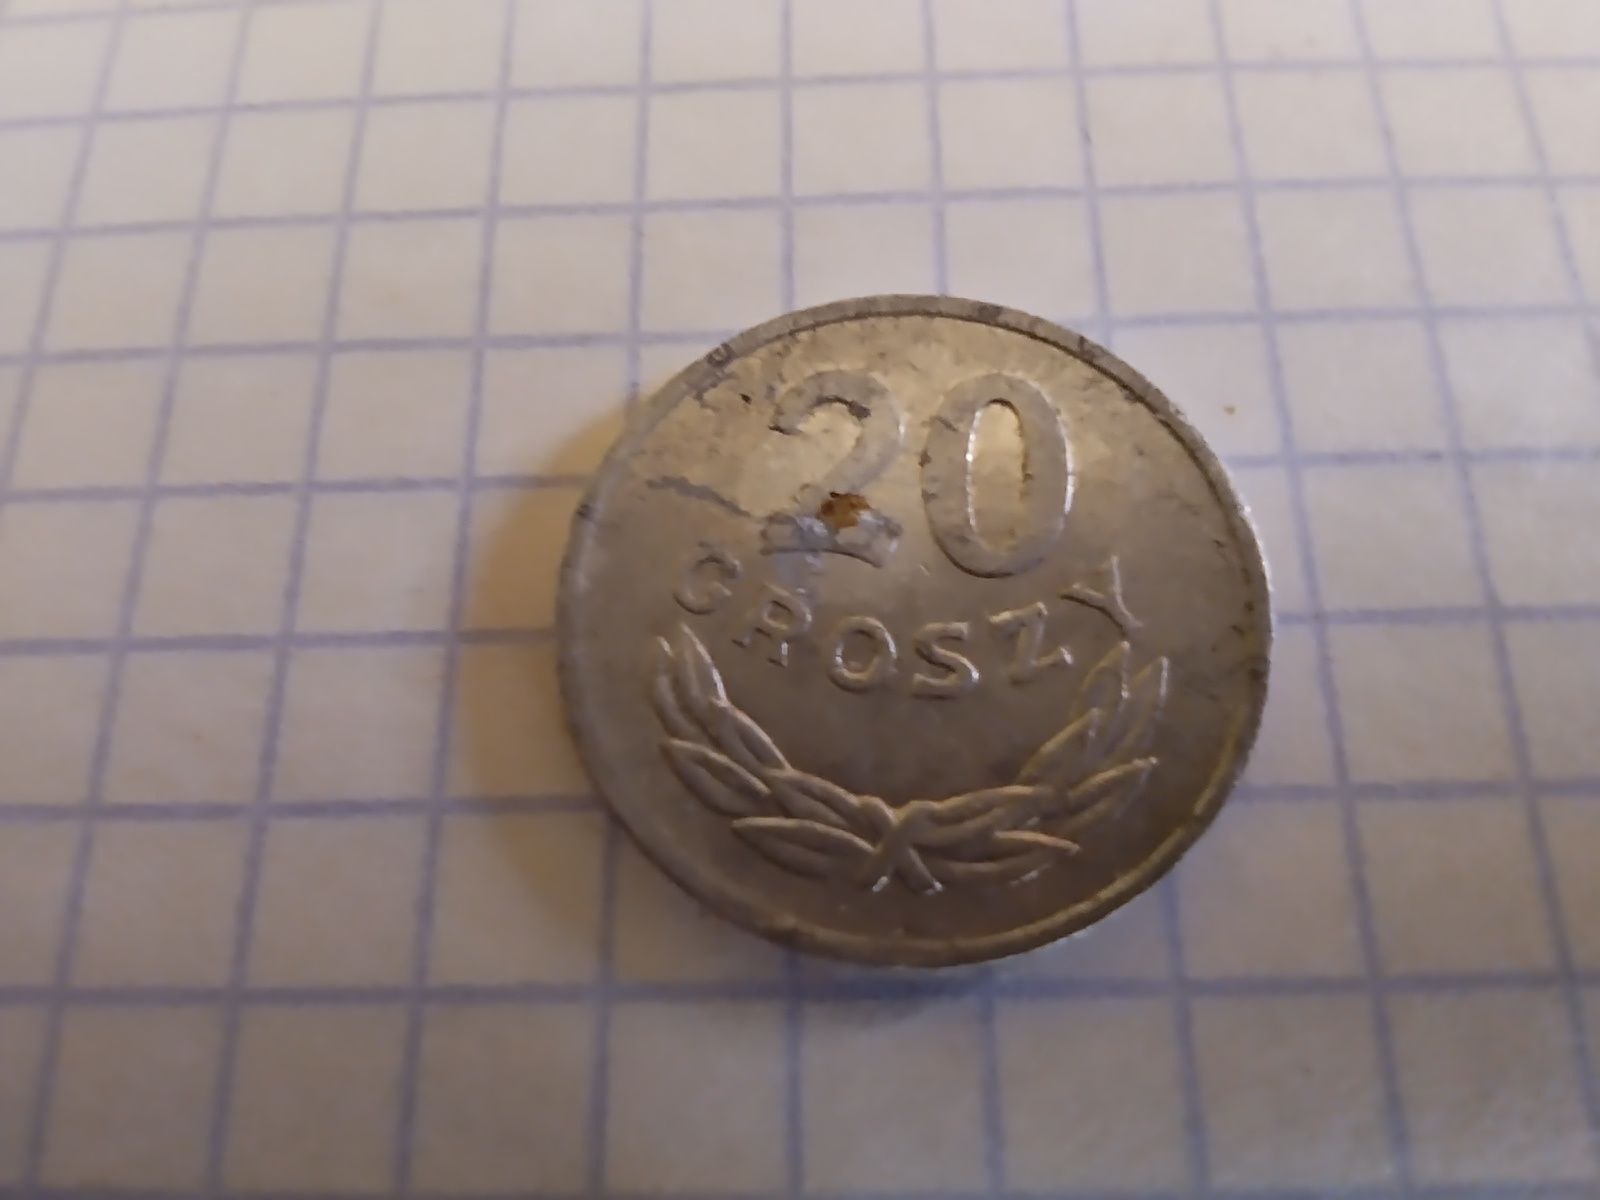 Moneta 20gr z roku 1980